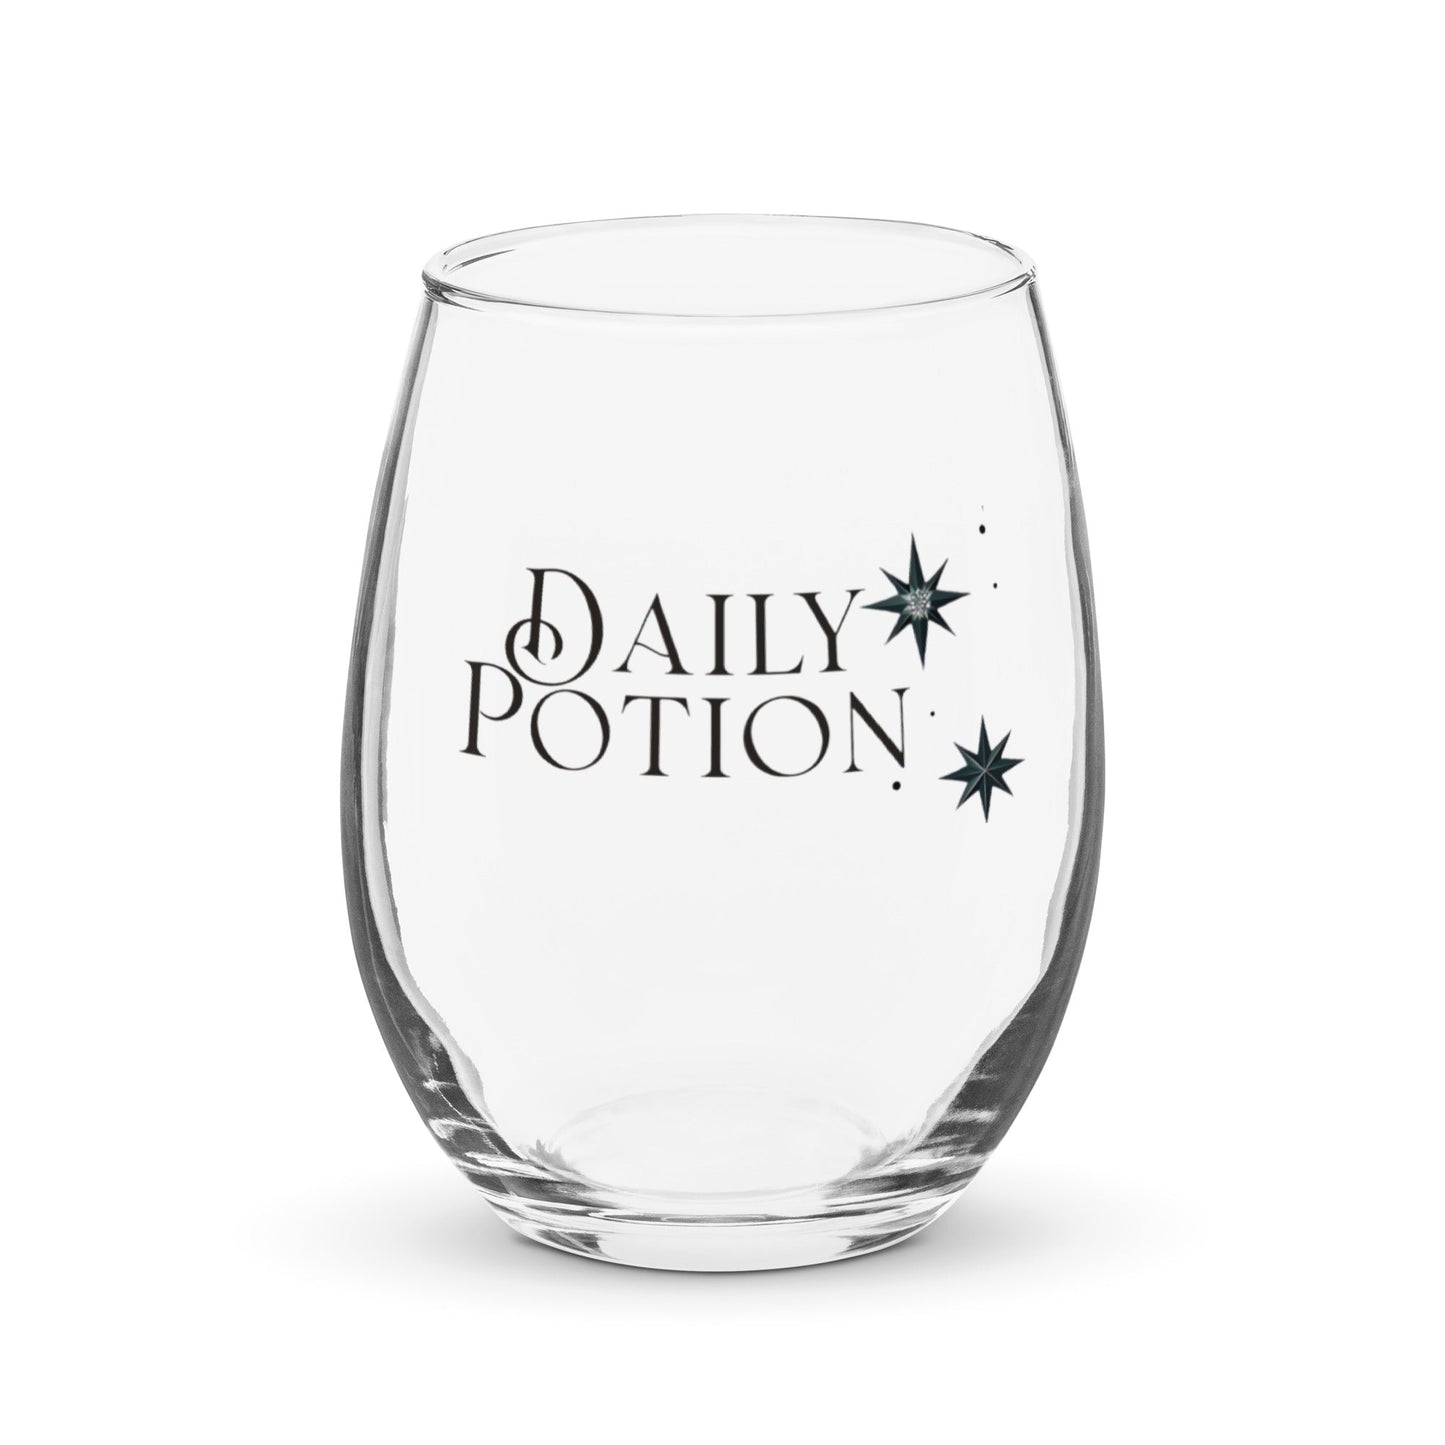 Daily Potion Stemless Wine GlassVTZdesignscupglassgothic